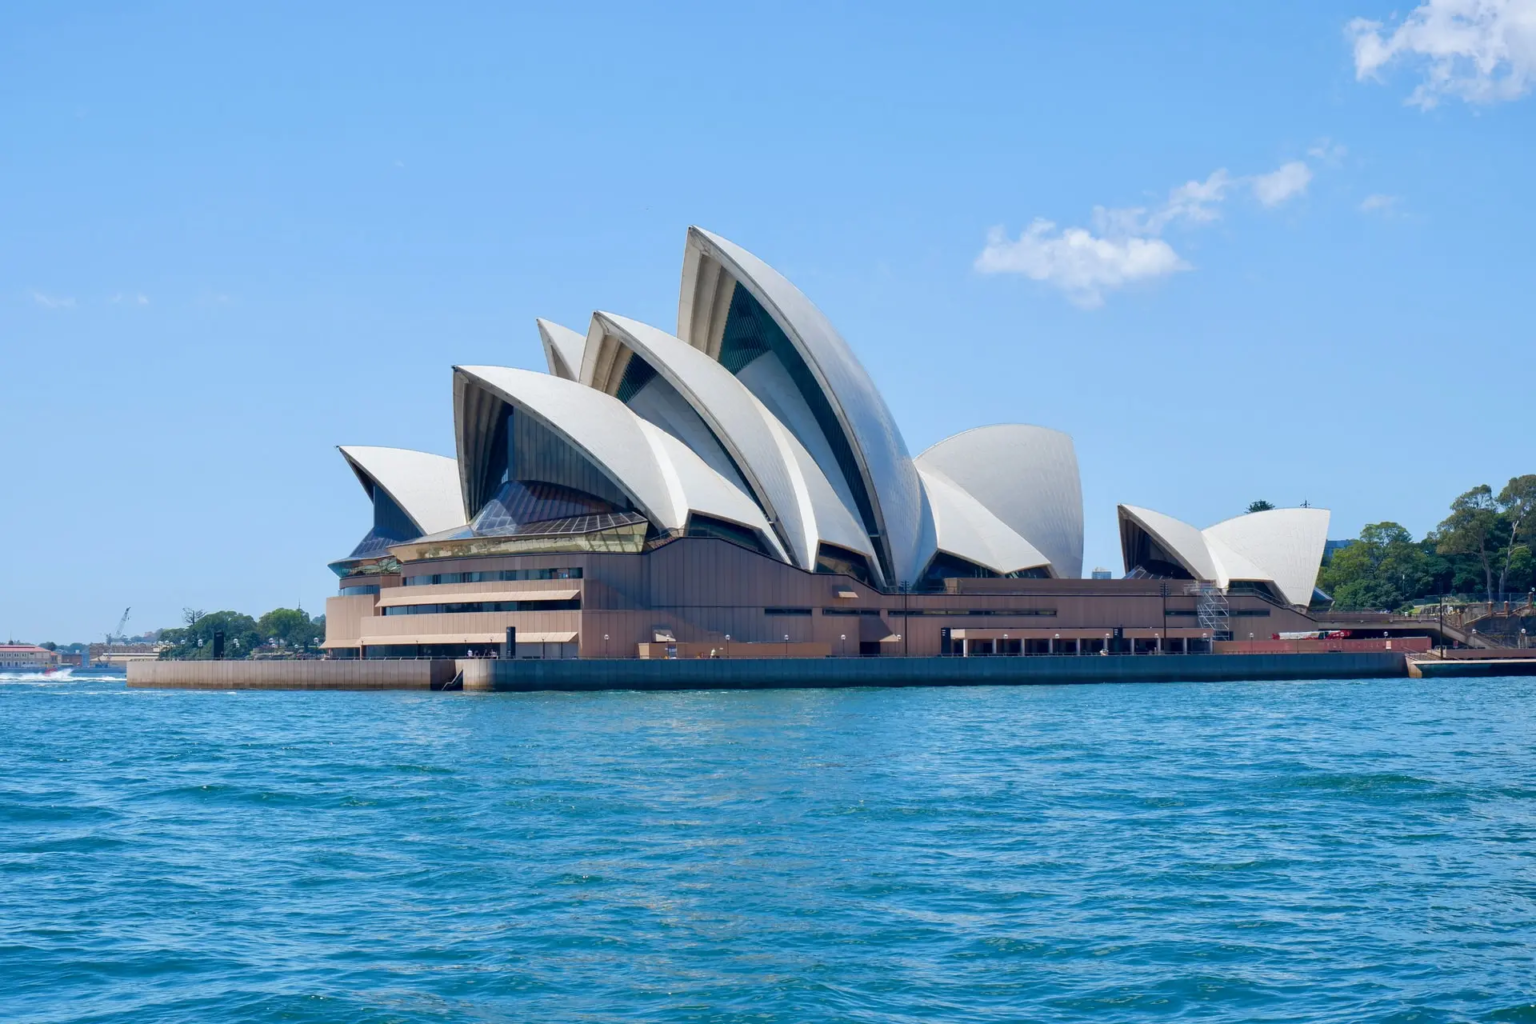 Australia - Opera House